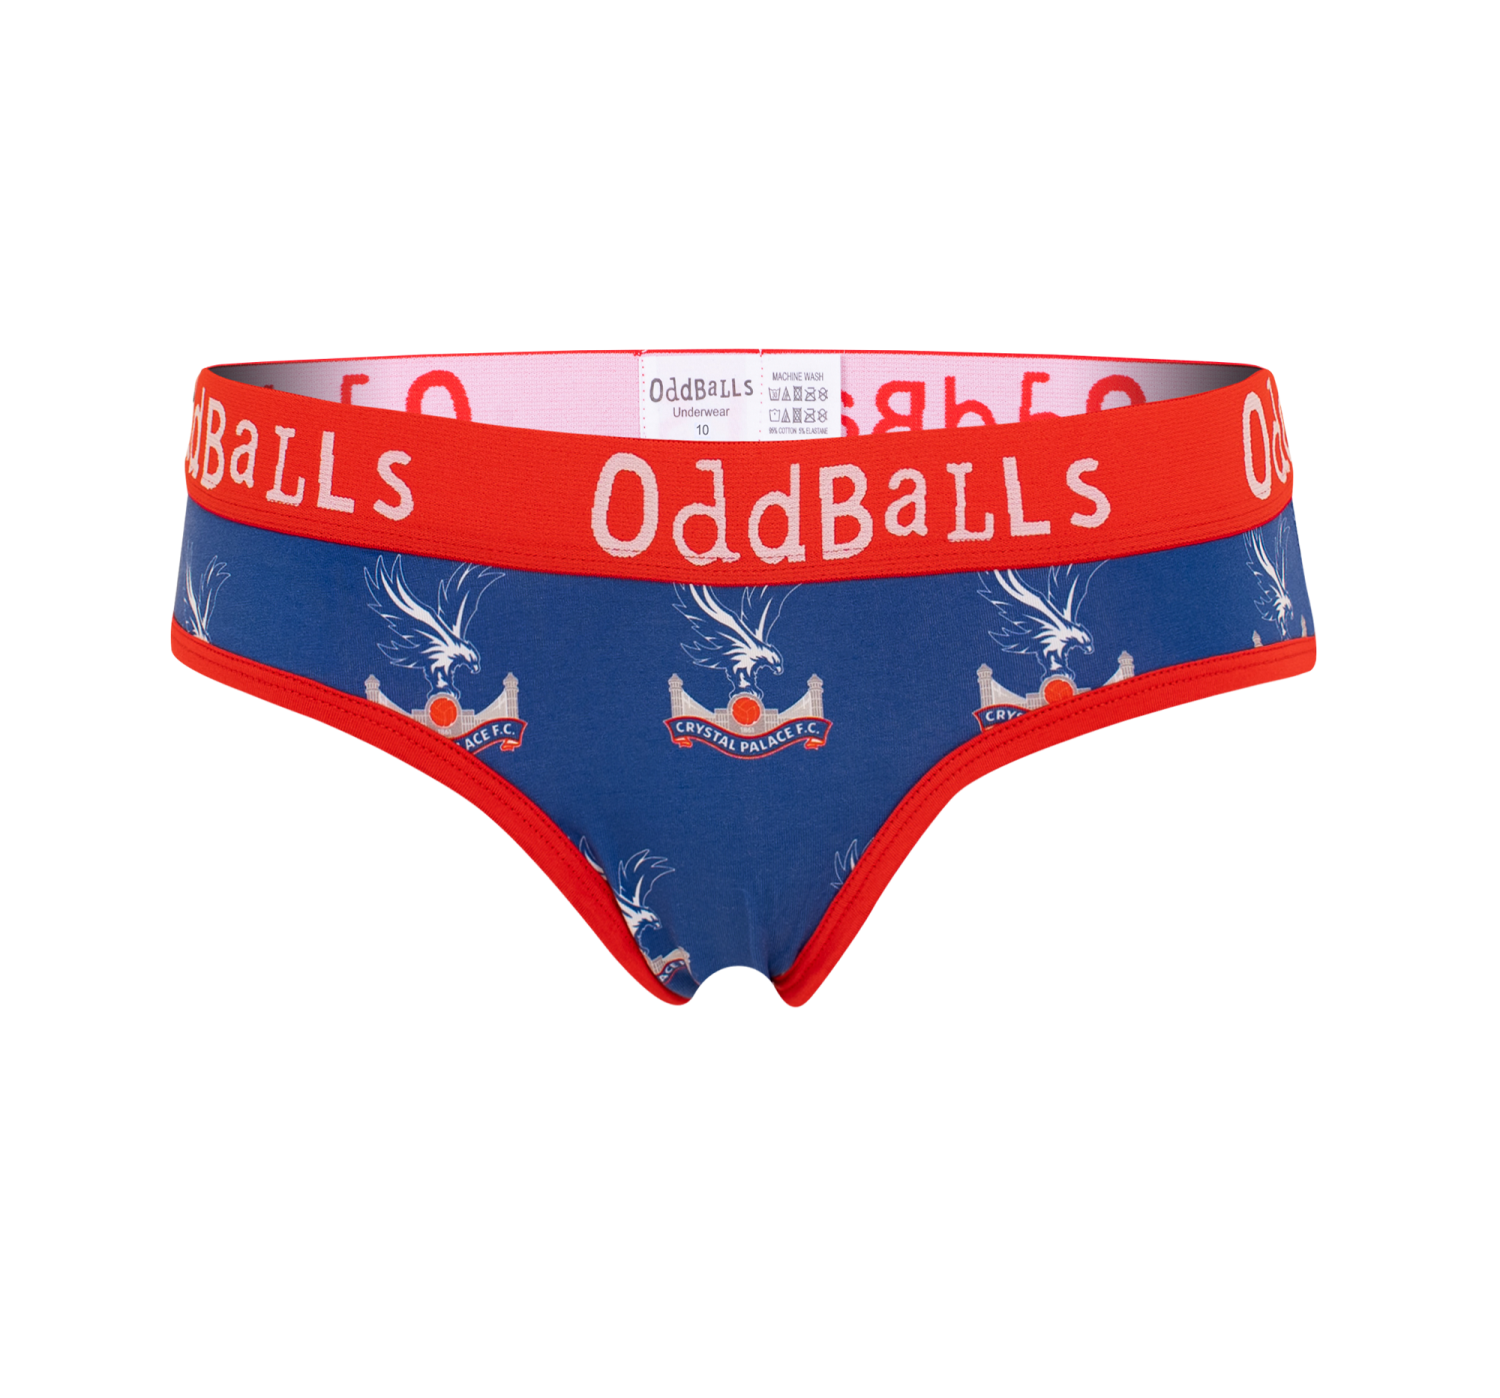 OddBalls - Ladies Boxers Subscription